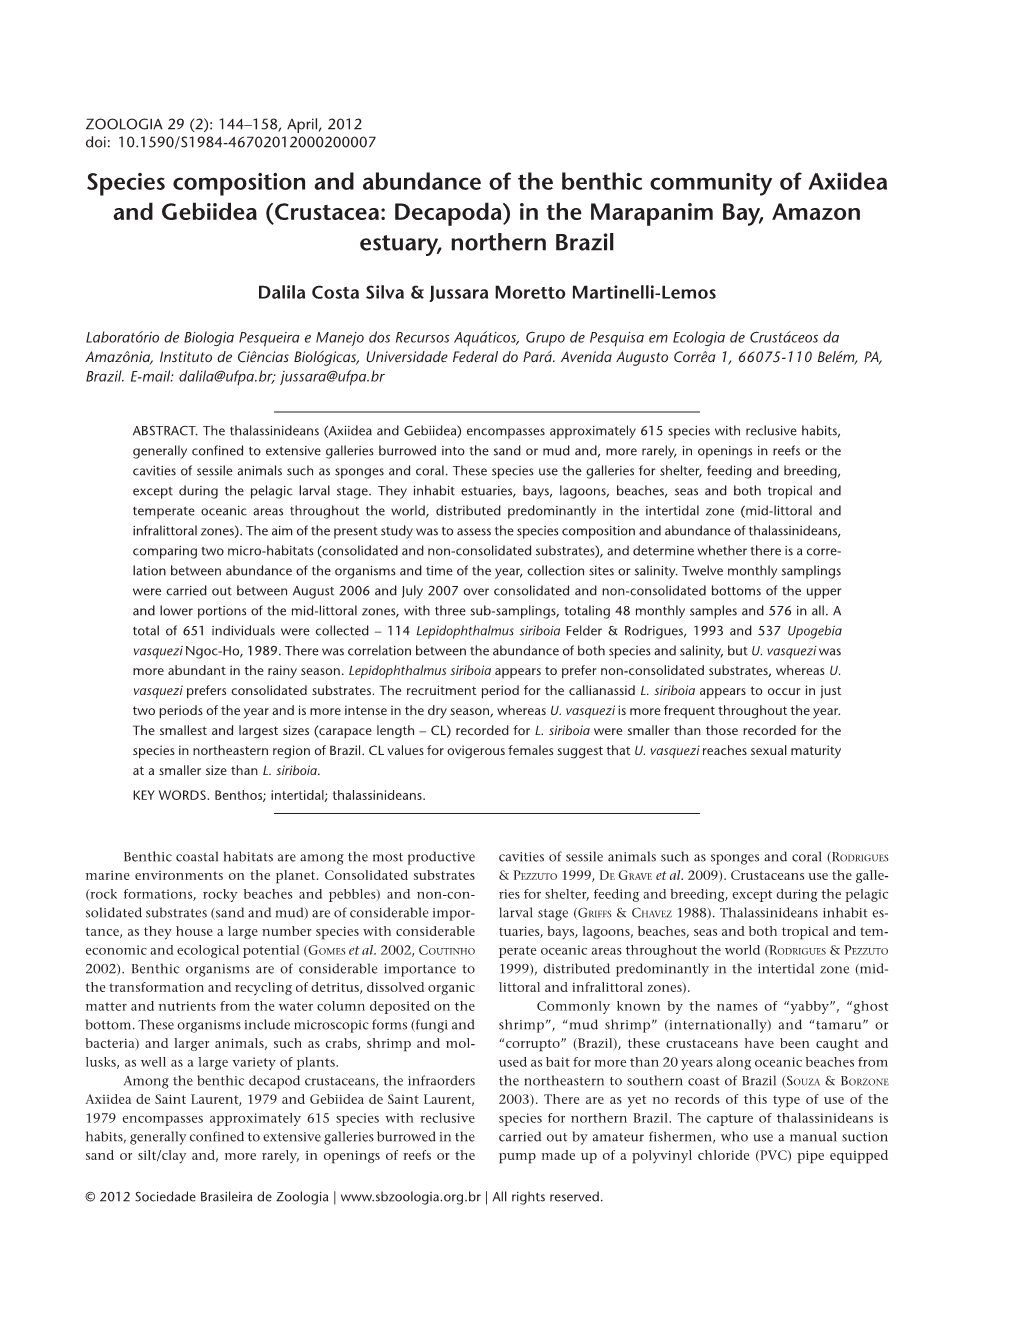 Species Composition and Abundance of the Benthic Community of Axiidea and Gebiidea (Crustacea: Decapoda) in the Marapanim Bay, Amazon Estuary, Northern Brazil